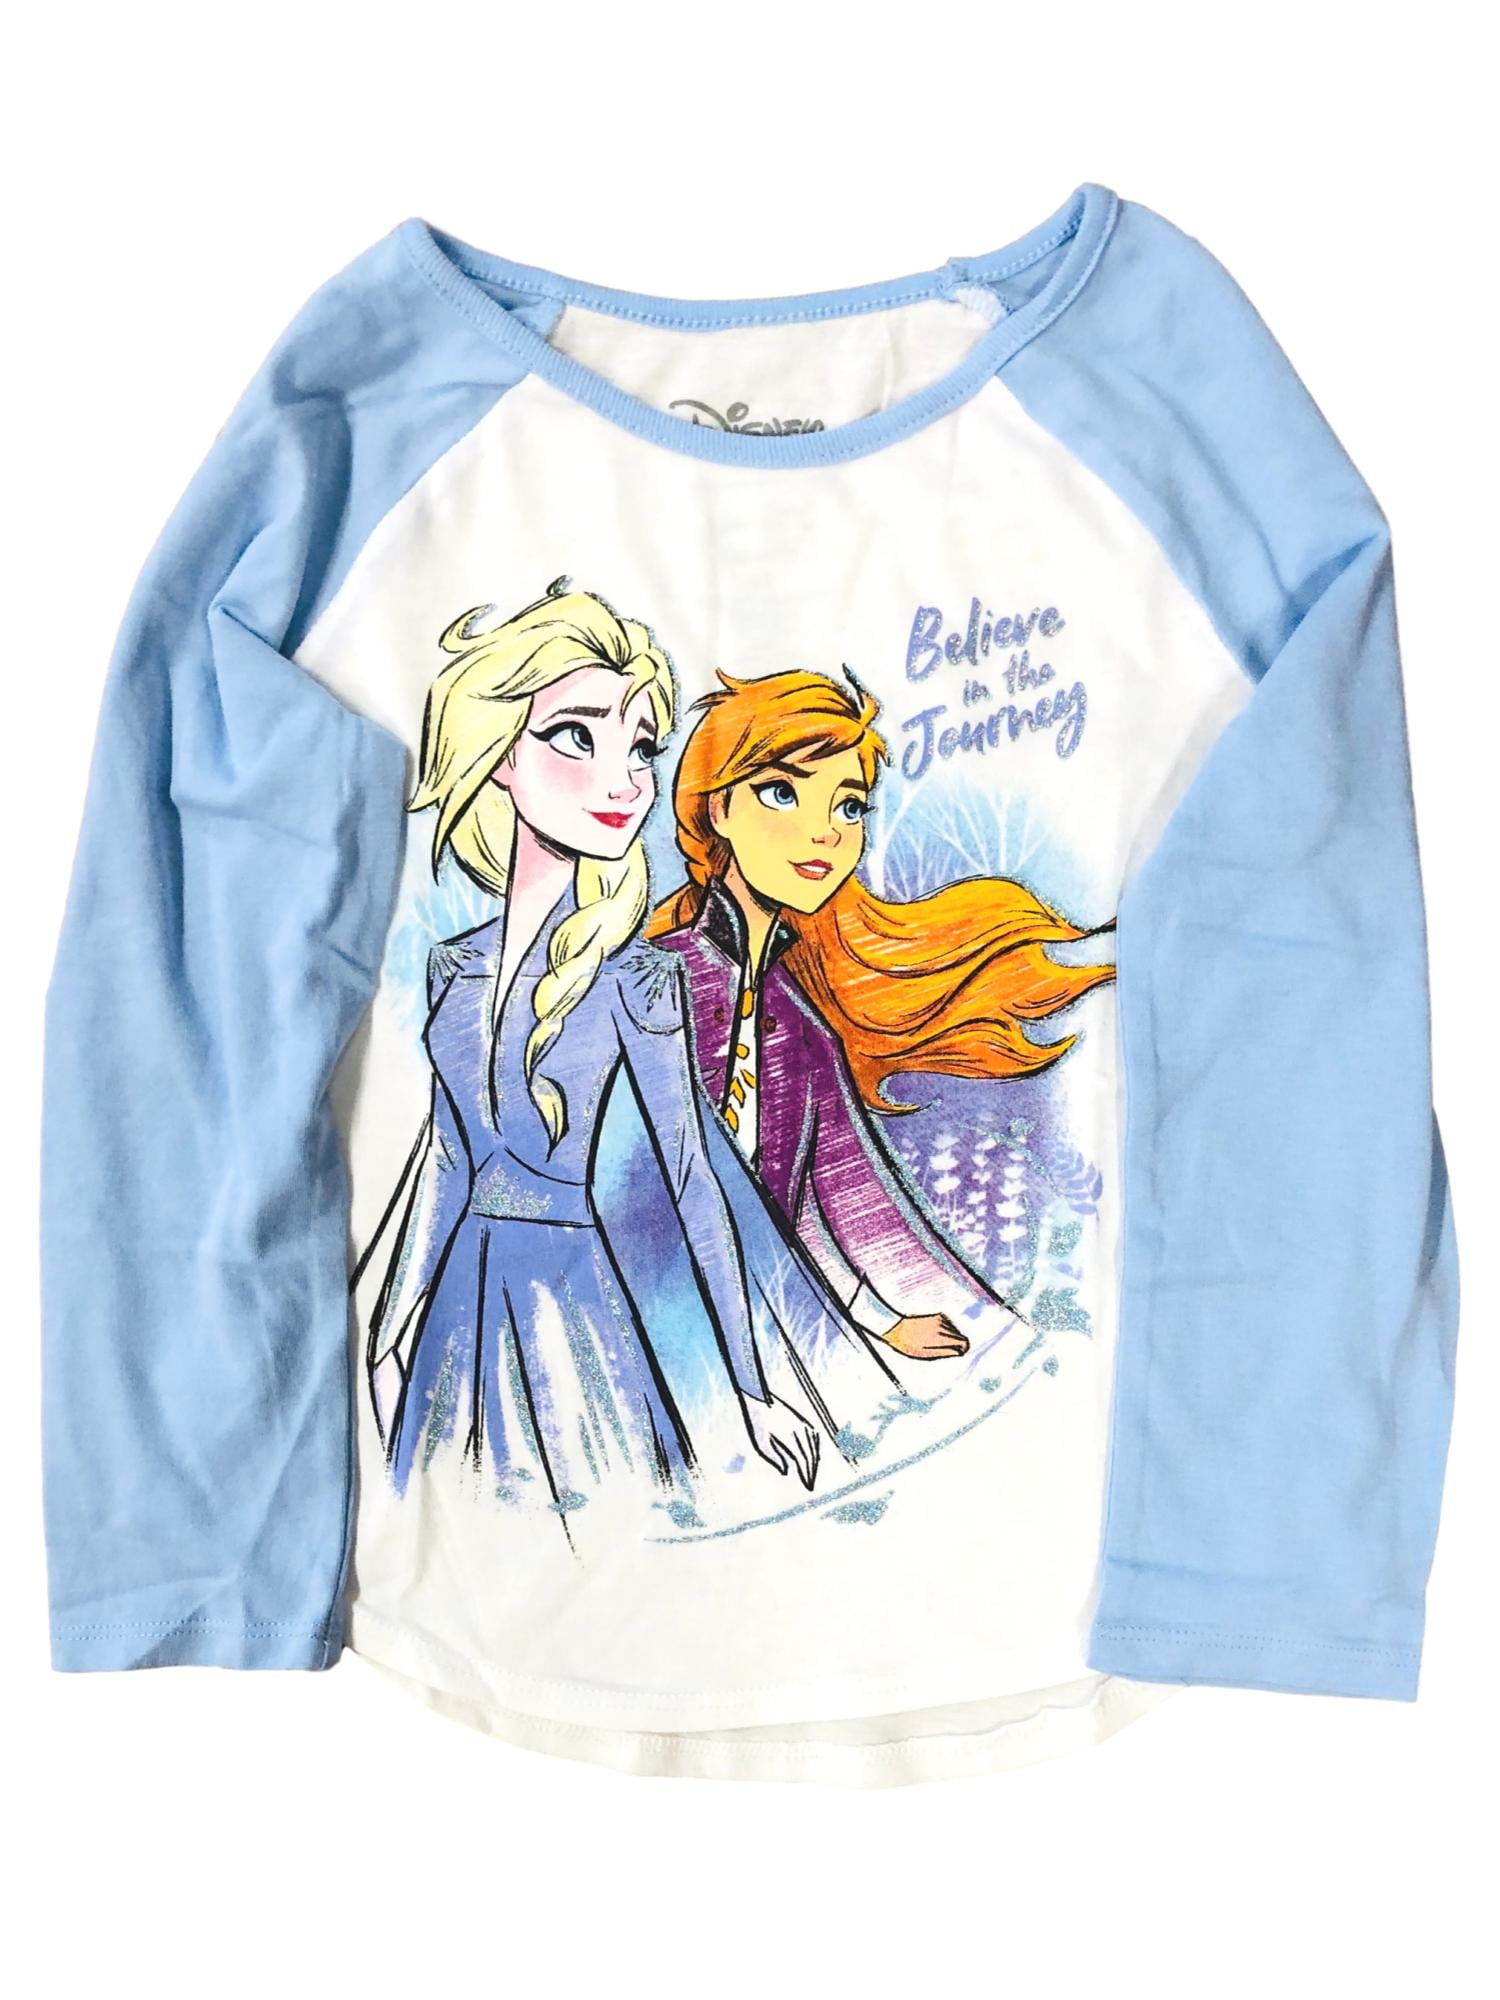 Disney Frozen Toddler Girls Elsa Believe In The Journey T-Shirt Tee Shirt  3T